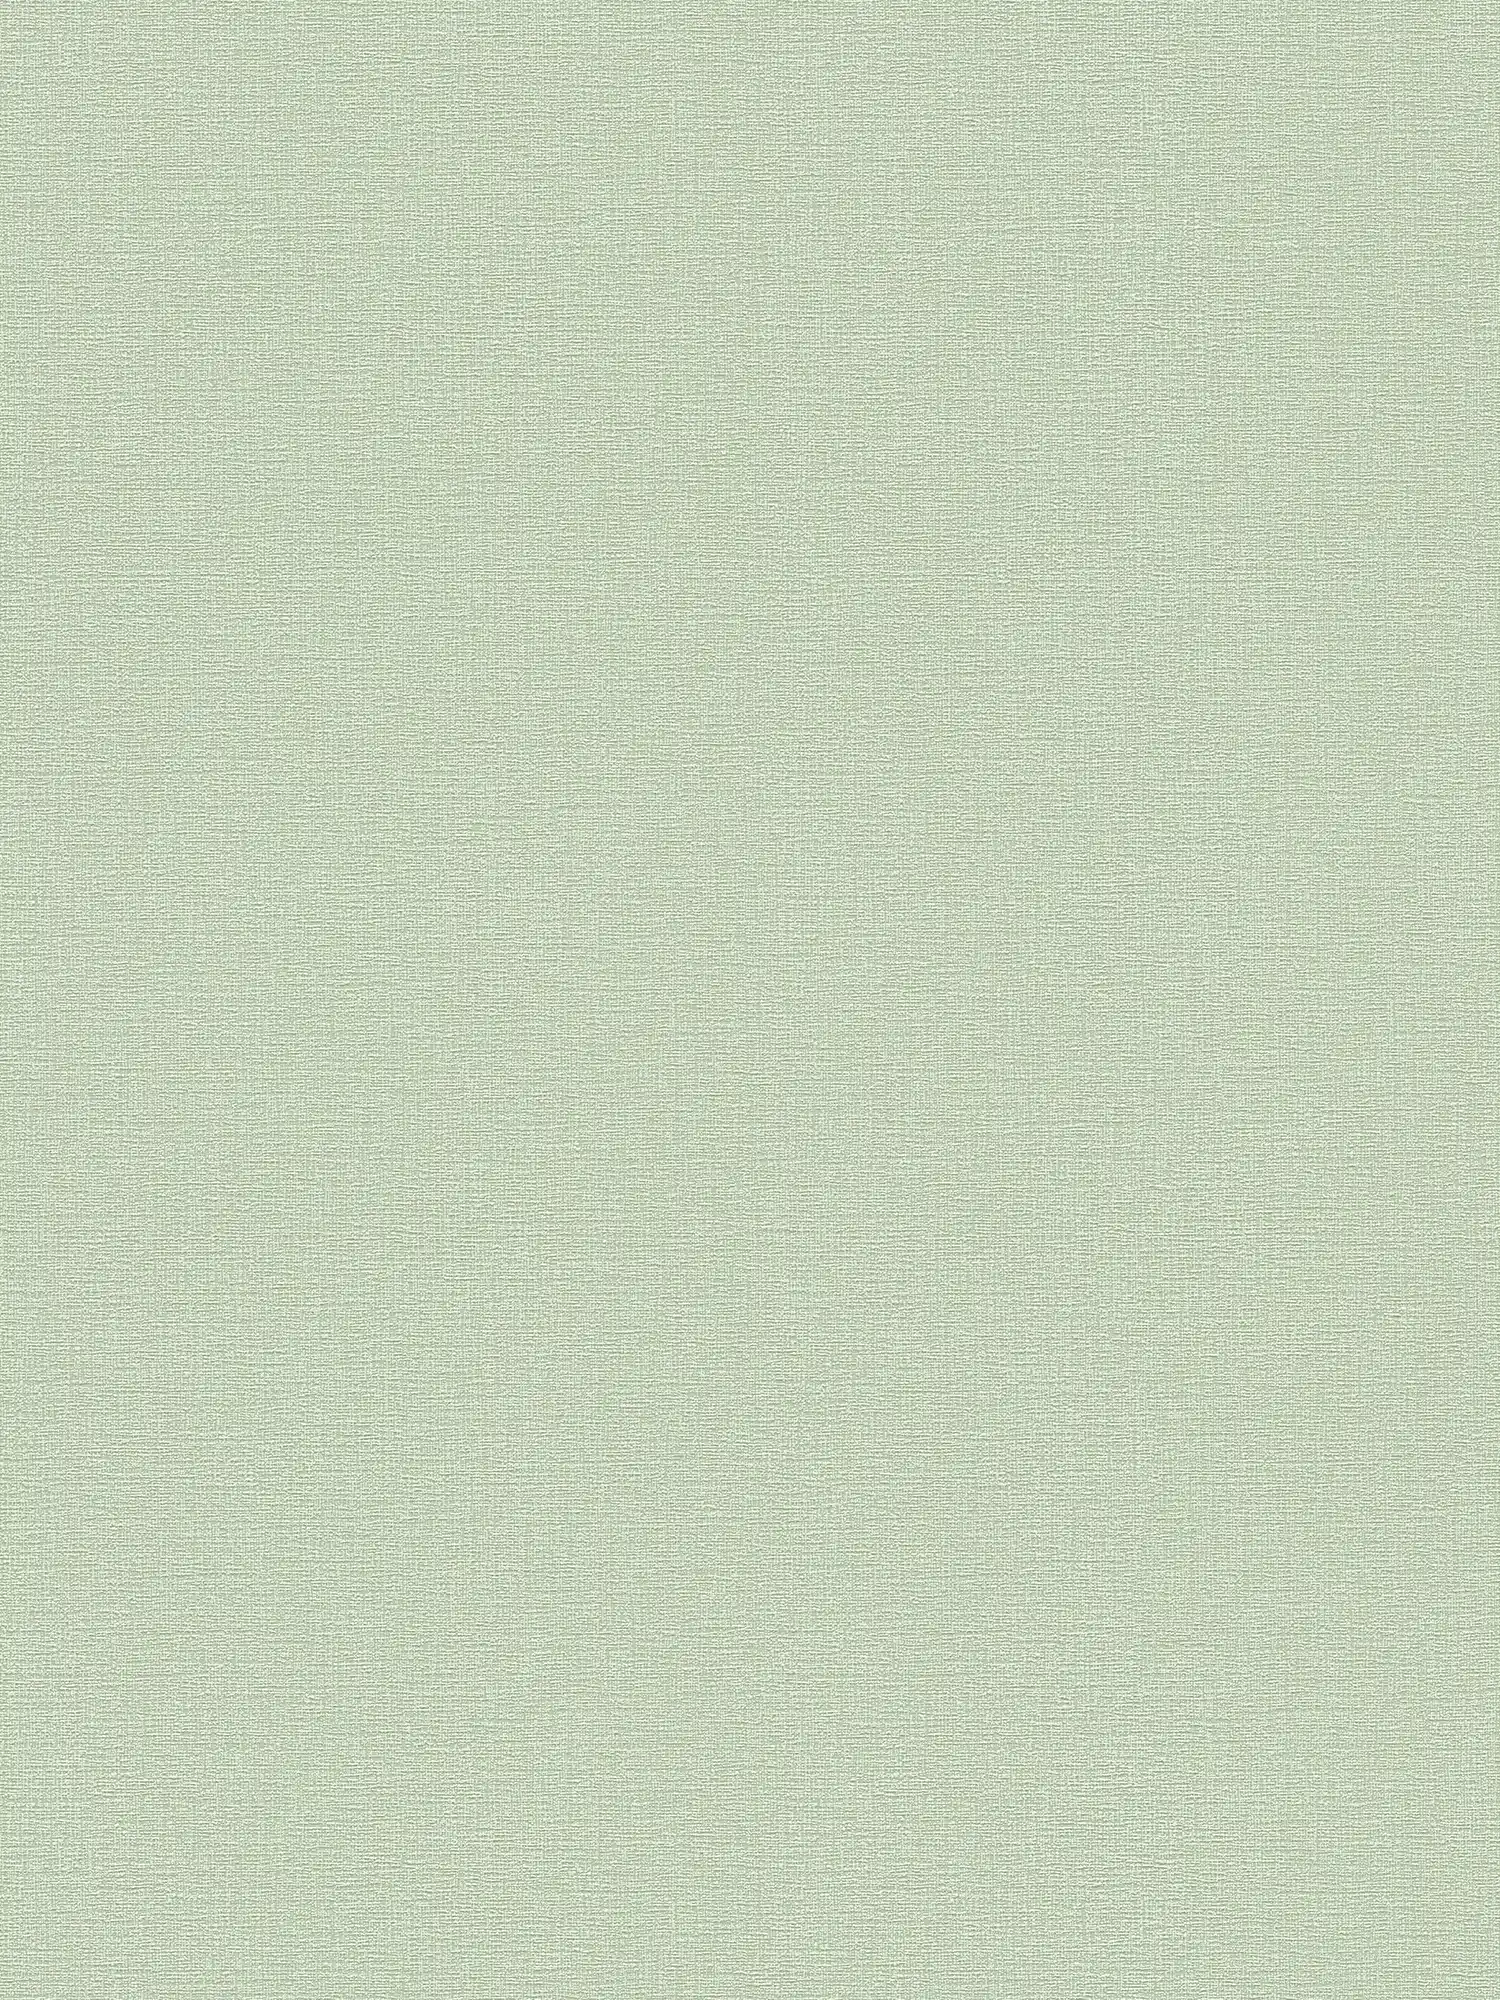 Carta da parati in stile naturale, tinta unita con motivo a trama - verde, bianco
